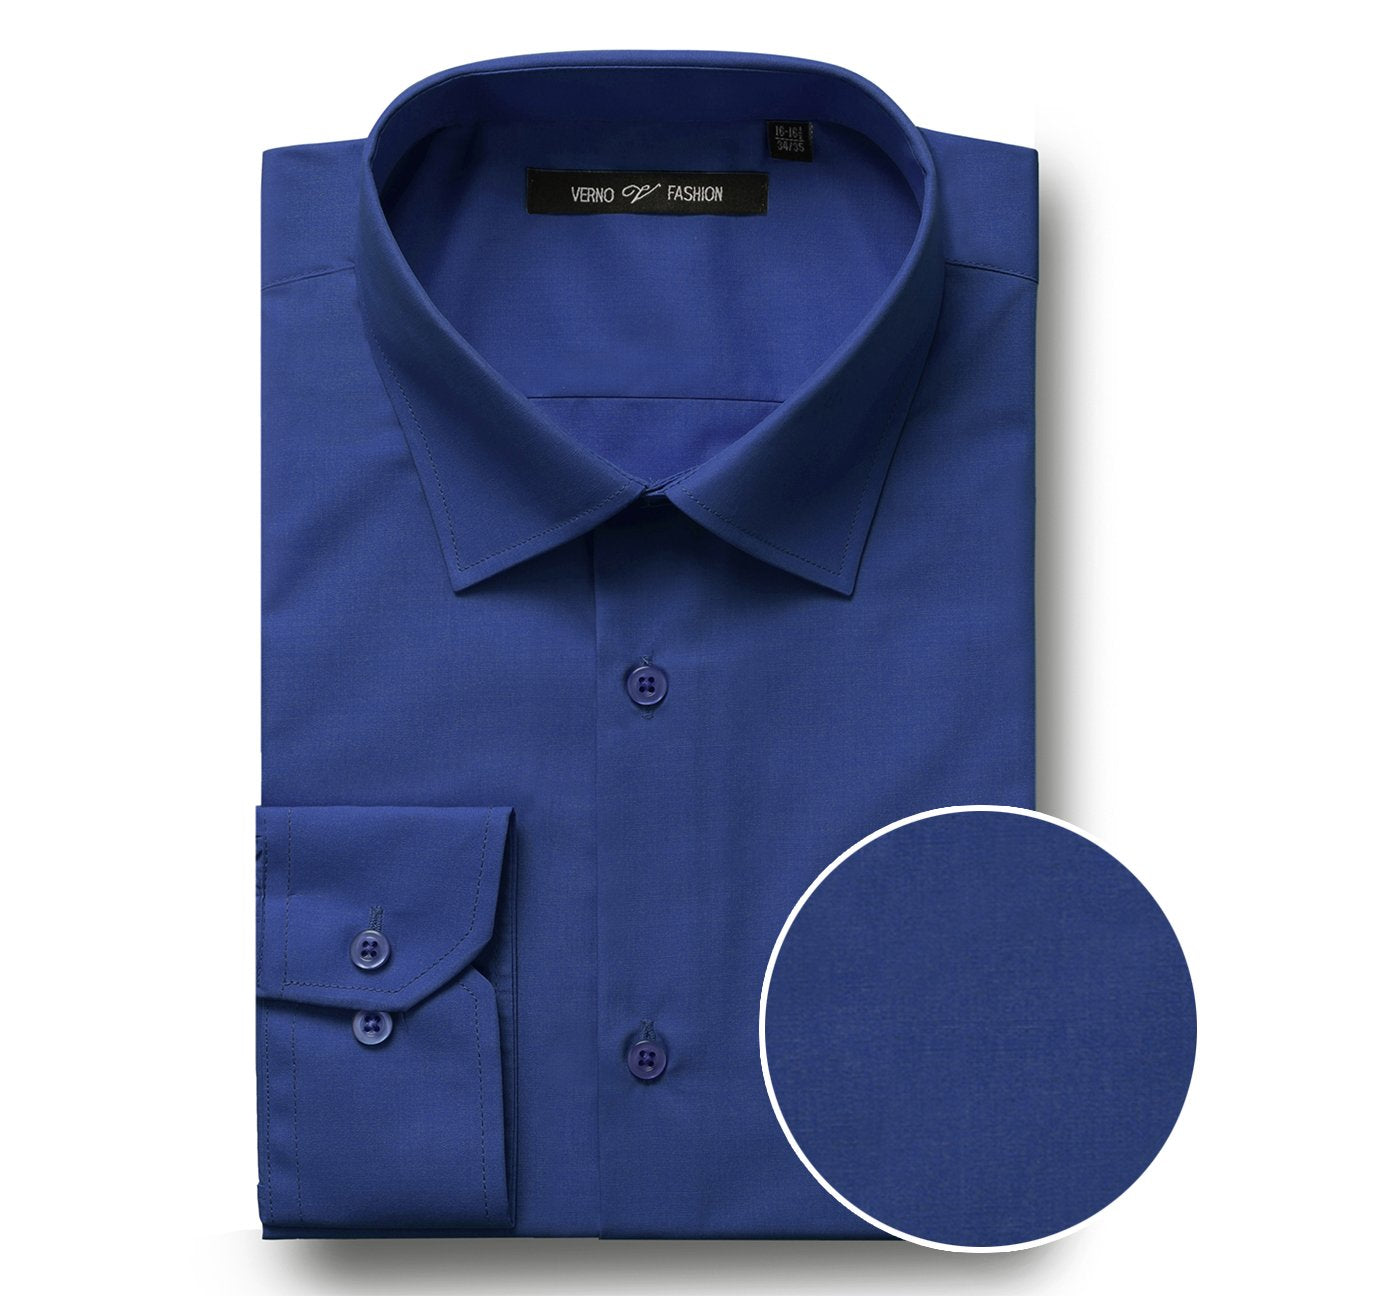 TC635 Men's Classic Fit Long Sleeve Navy Spread Collar Dress Shirt